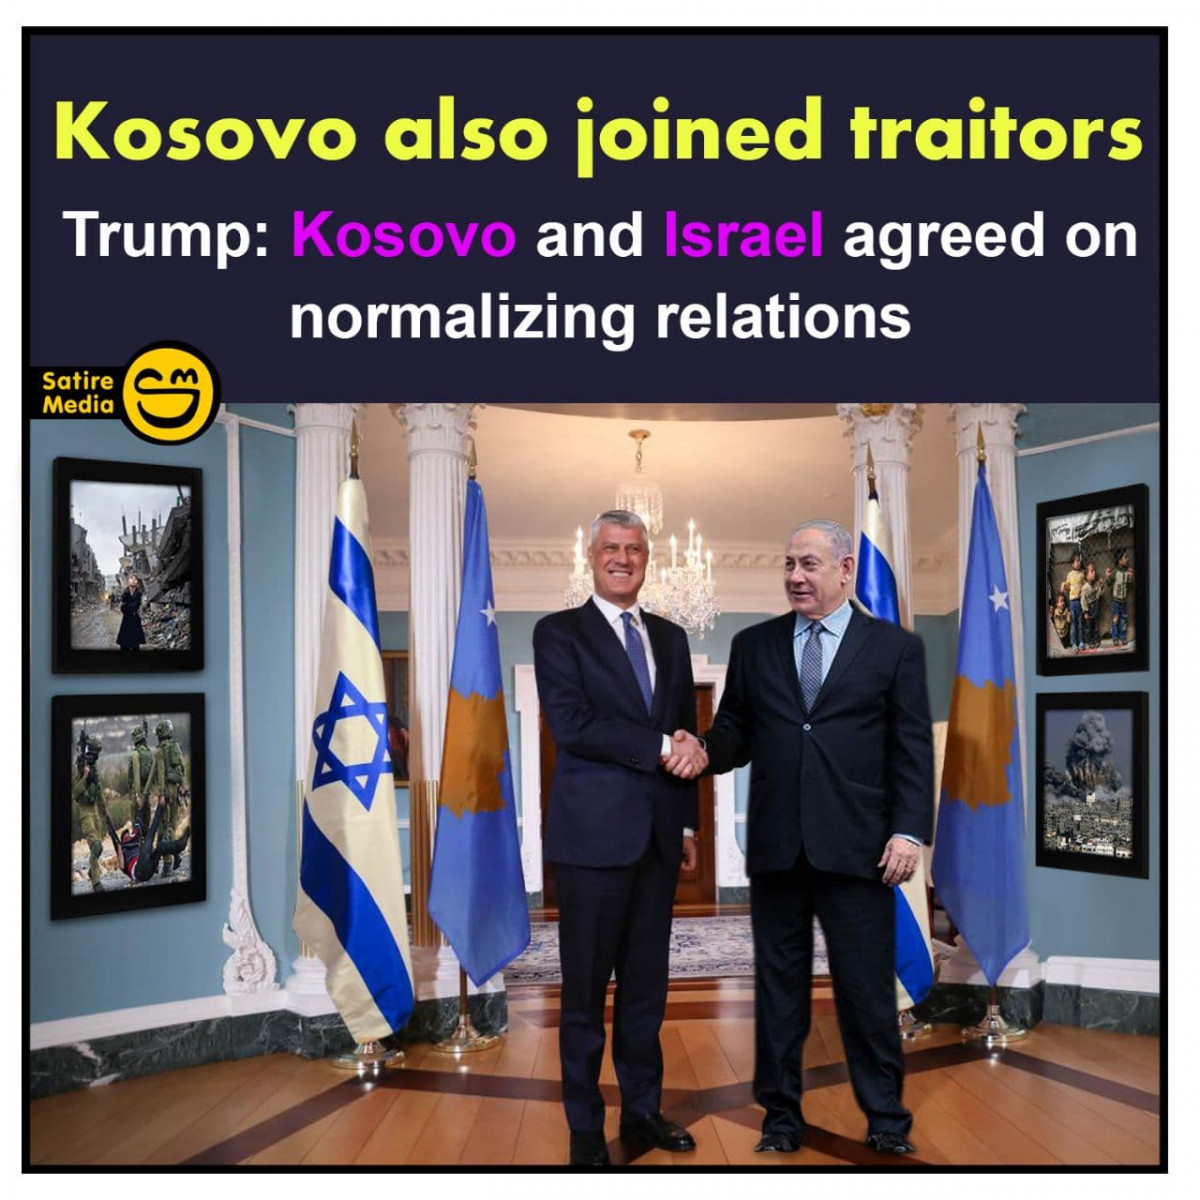 Kosovo also joined traitors